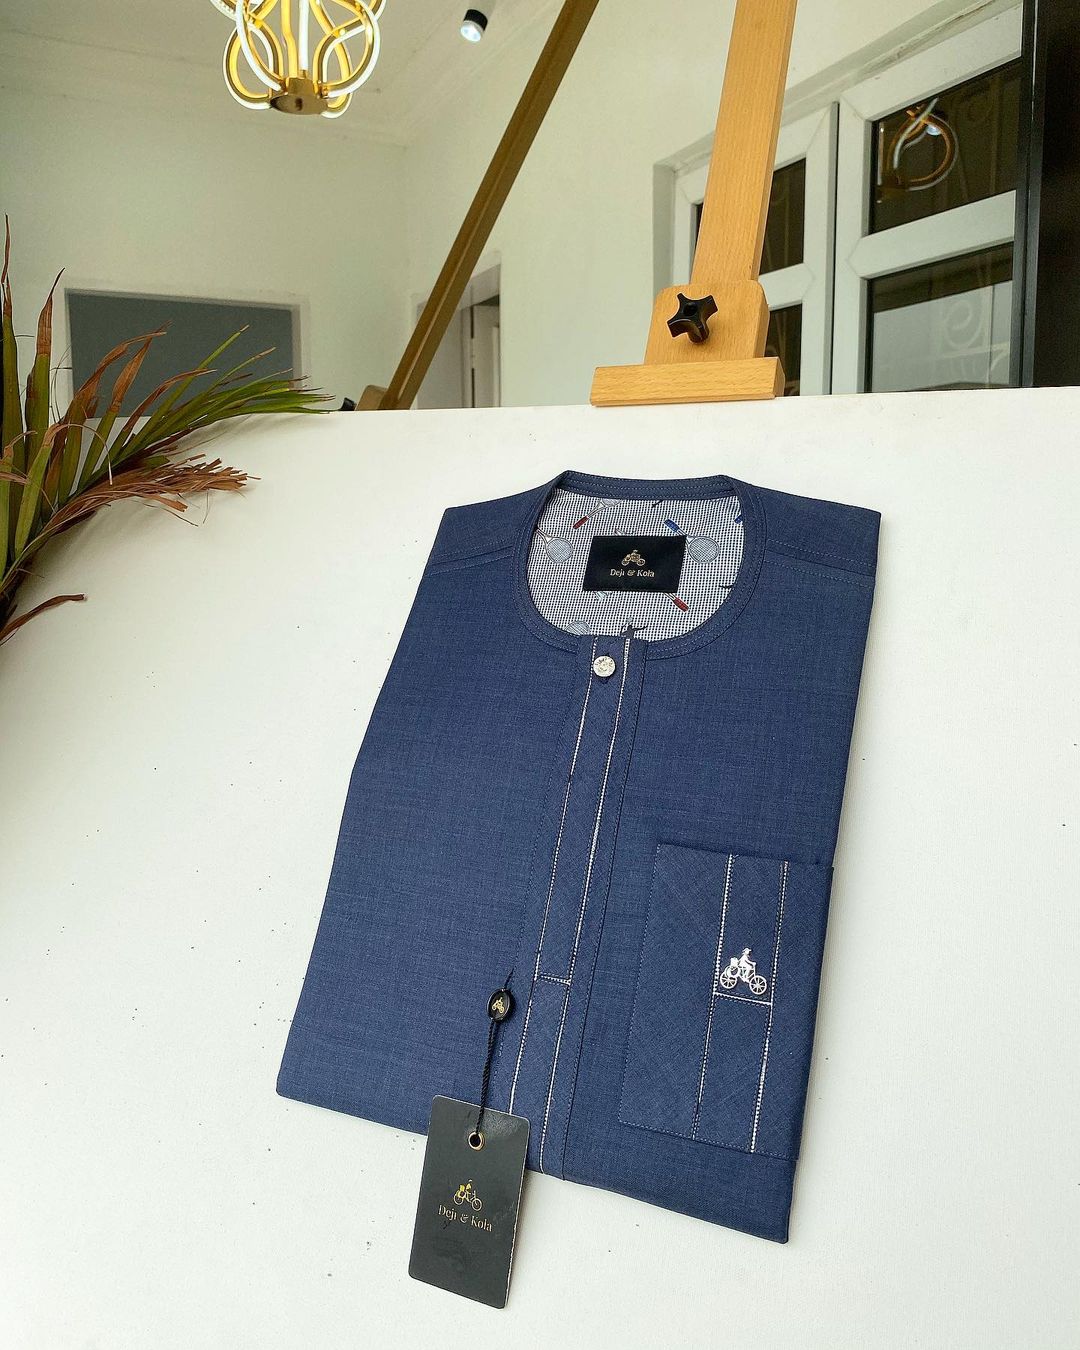 Shop Navy blue kaftan with an interlocking pocket design - Deji & Kola